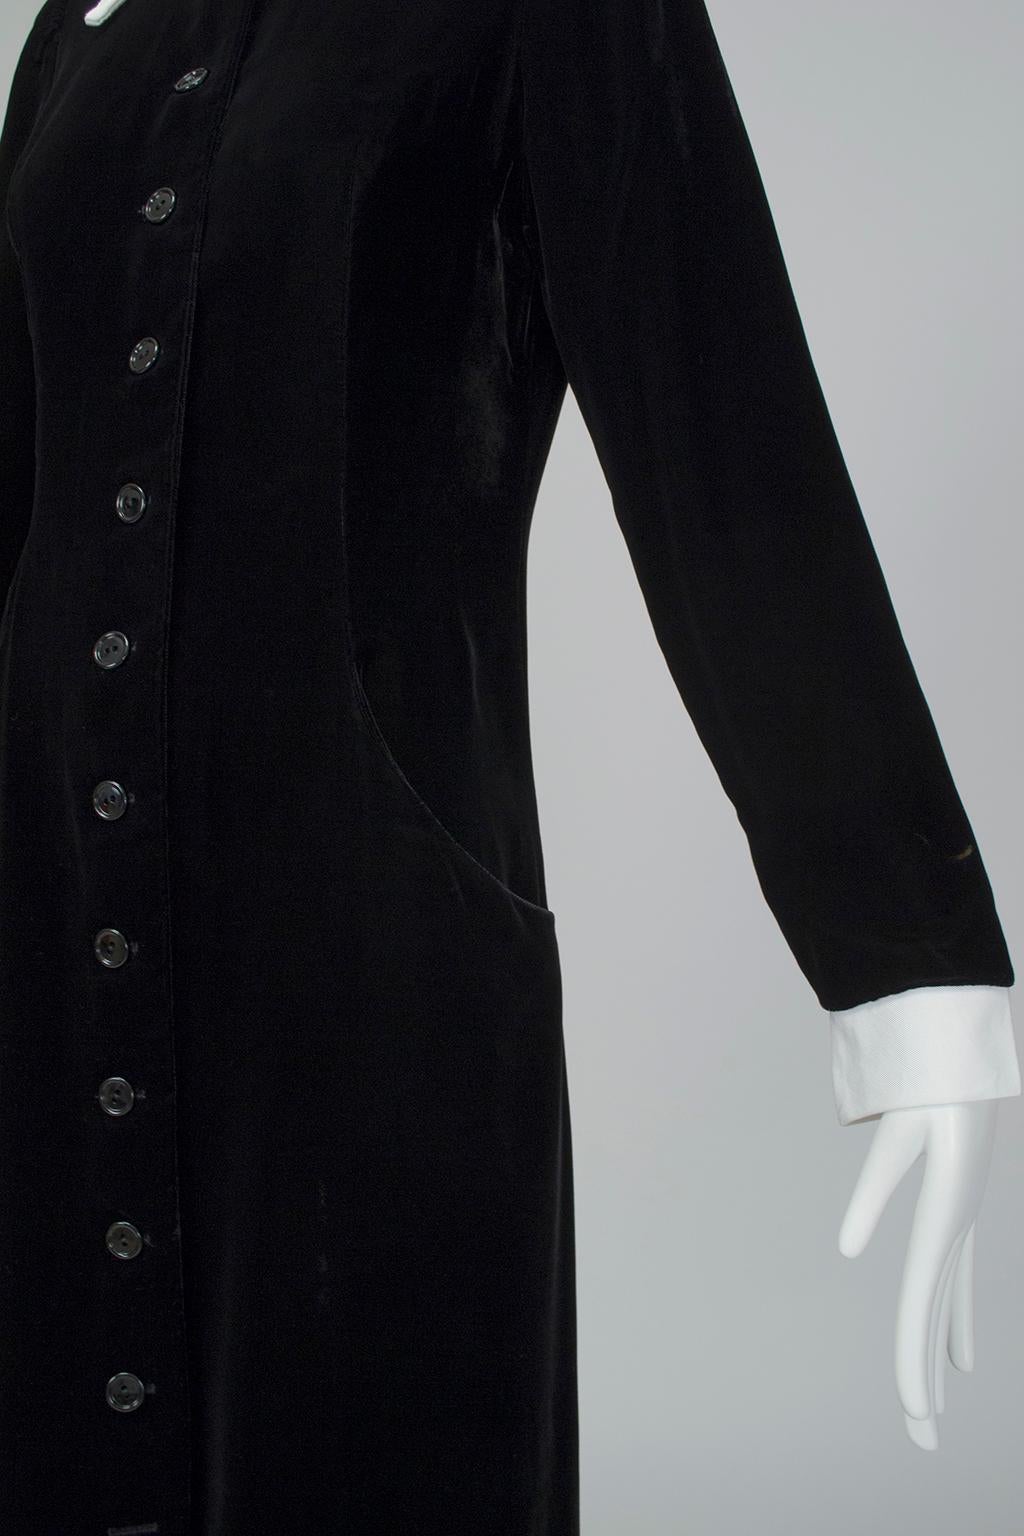 Minimalist Black Velvet Contrast Coat Dress with White Appliqué Collar- S, 1940s In Good Condition In Tucson, AZ